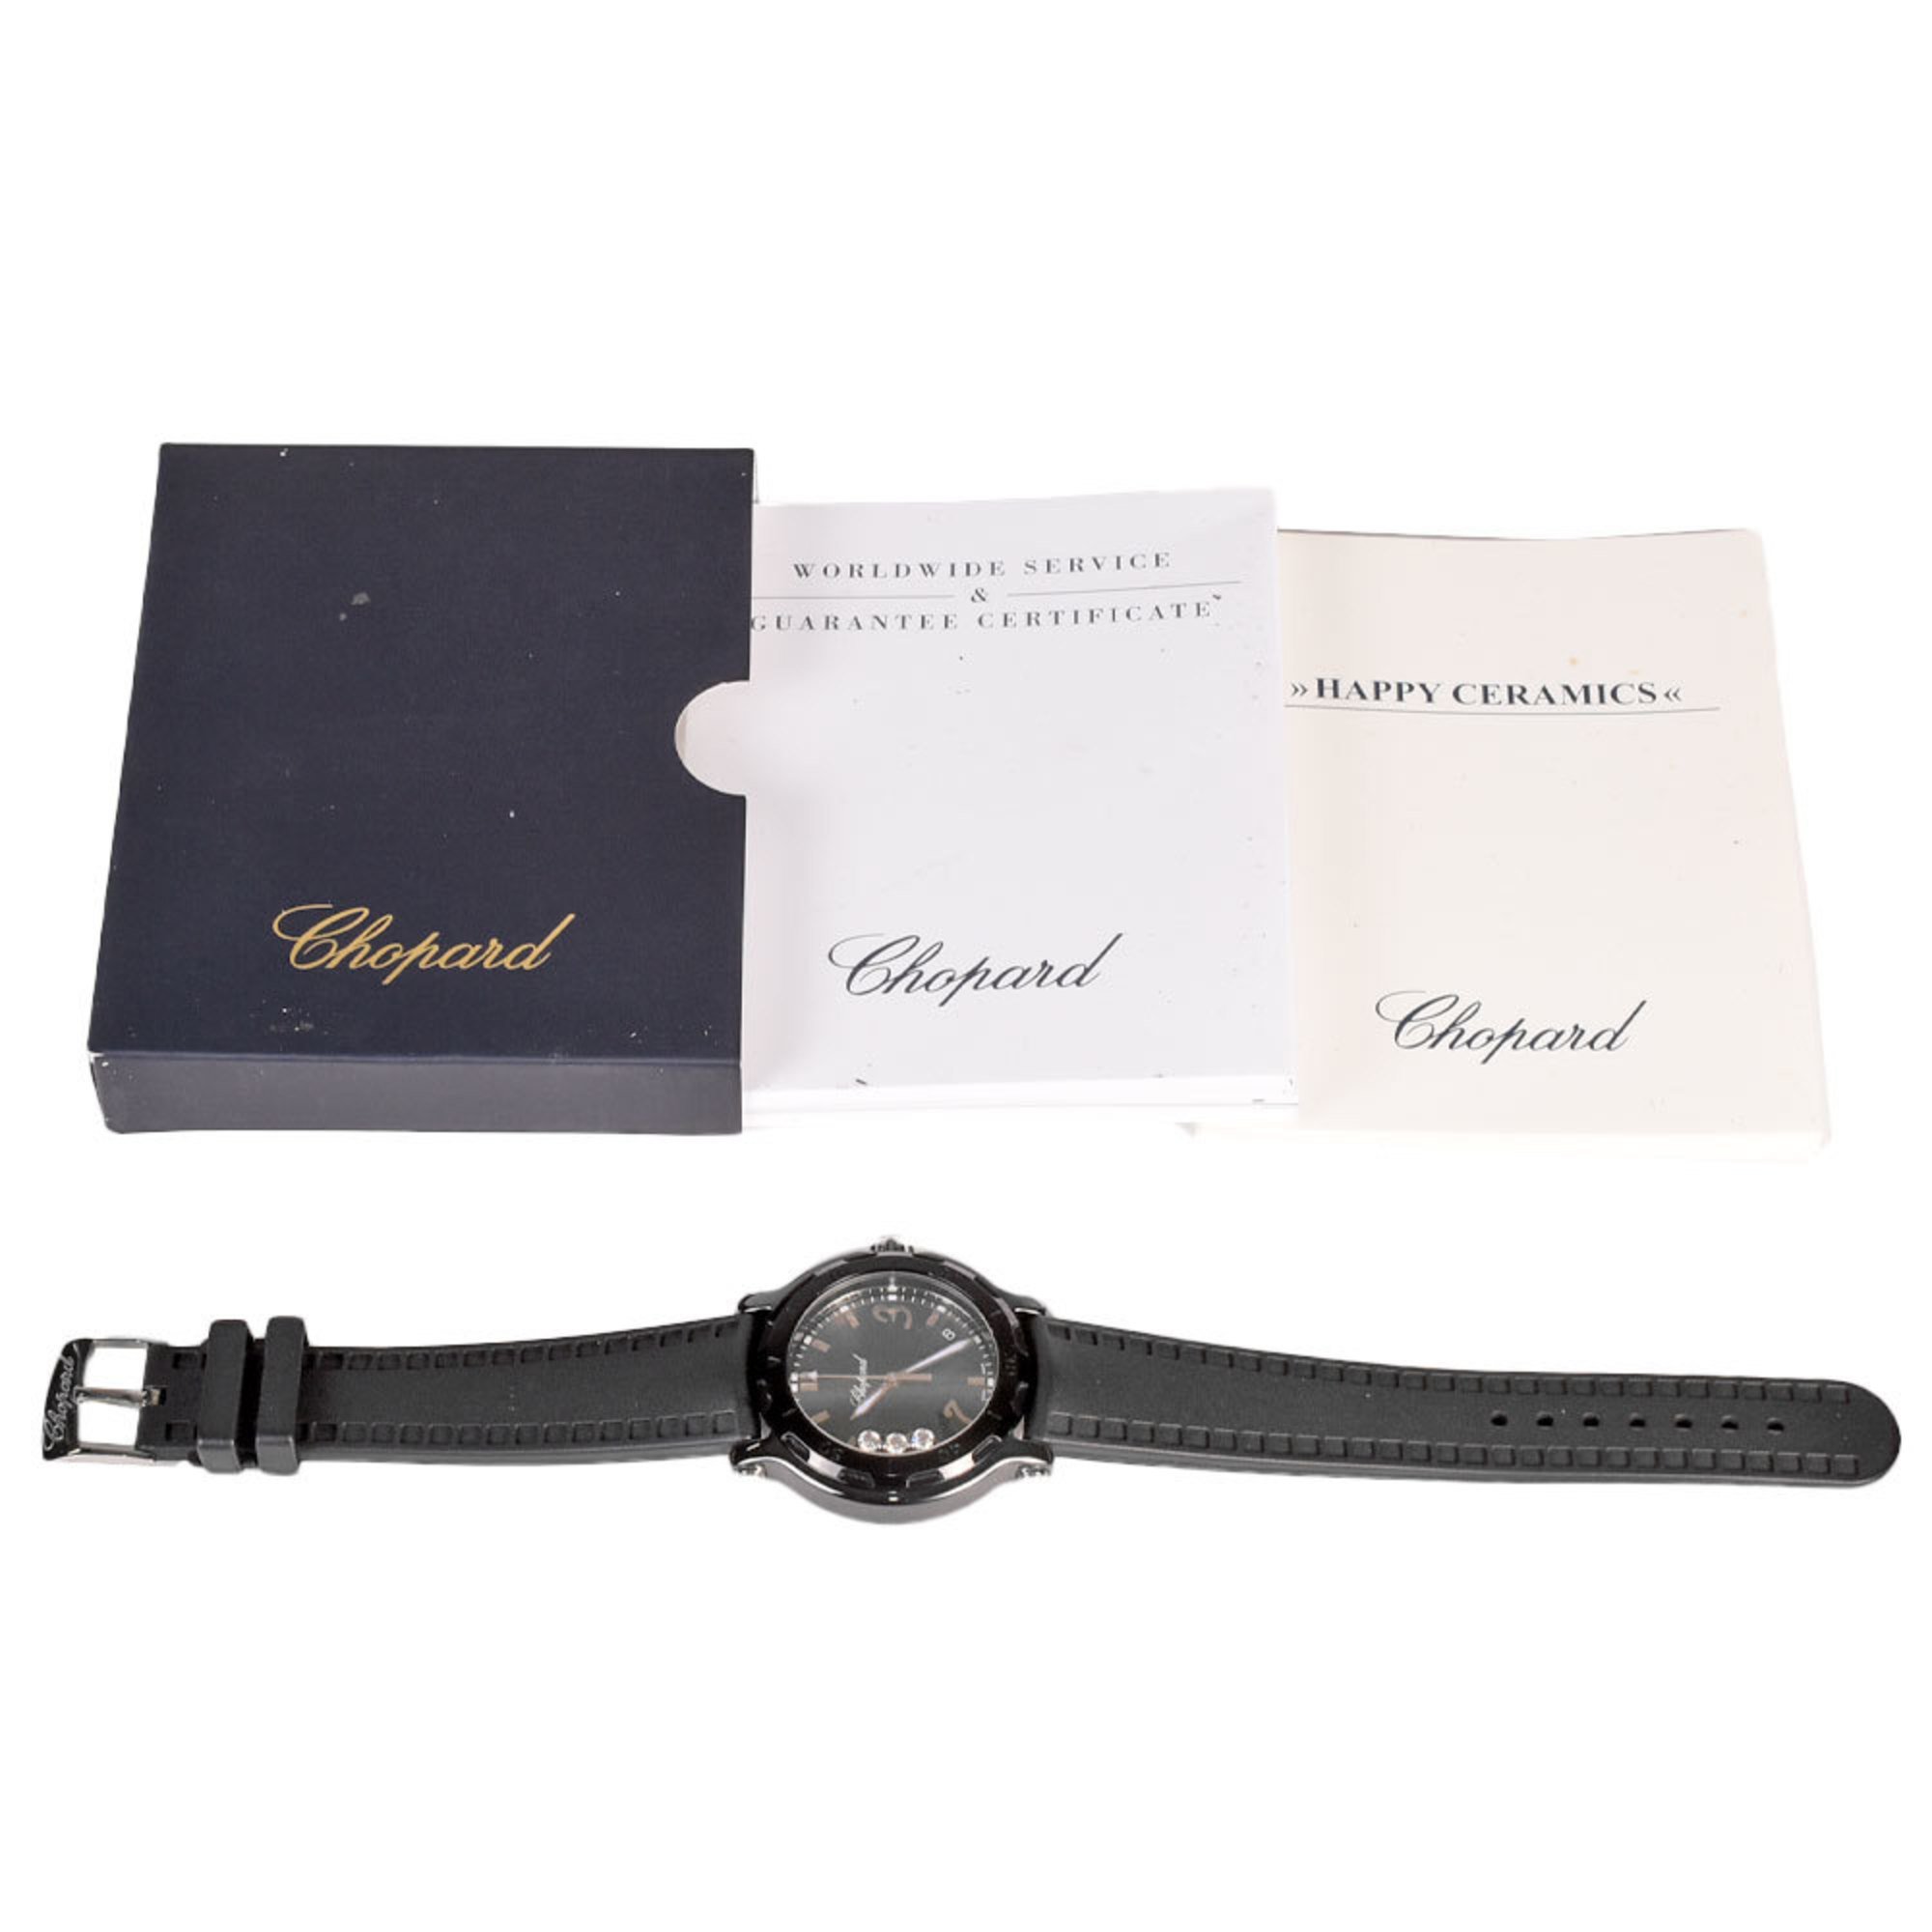 Chopard 8507 Heckel Limited 105 Happy Sport 3P Diamond Watch Quartz Black Dial Men's ITTW8ITKE8R2